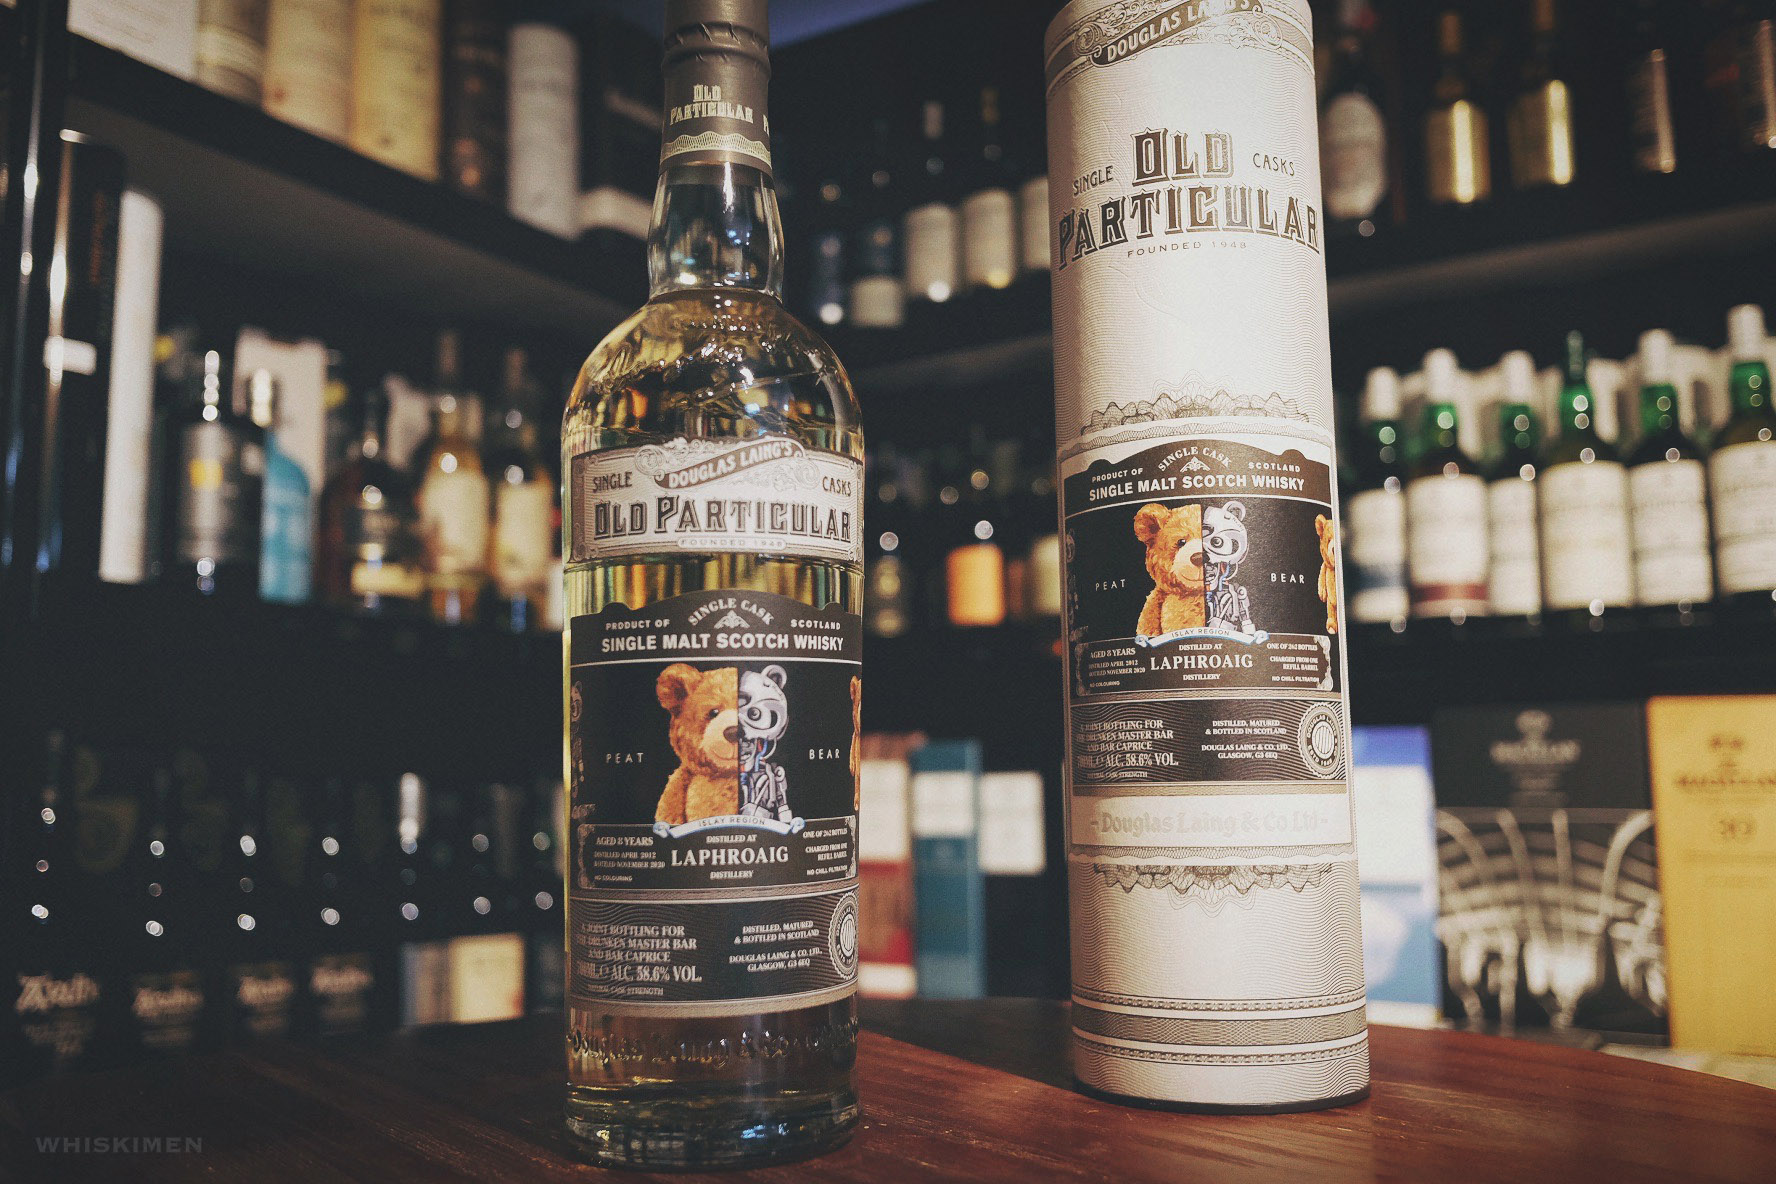 Old Particular Laphroaig 2012 8 Year Old Single Malt Scotch Whisky (The Drunken Master x Bar Caprice)